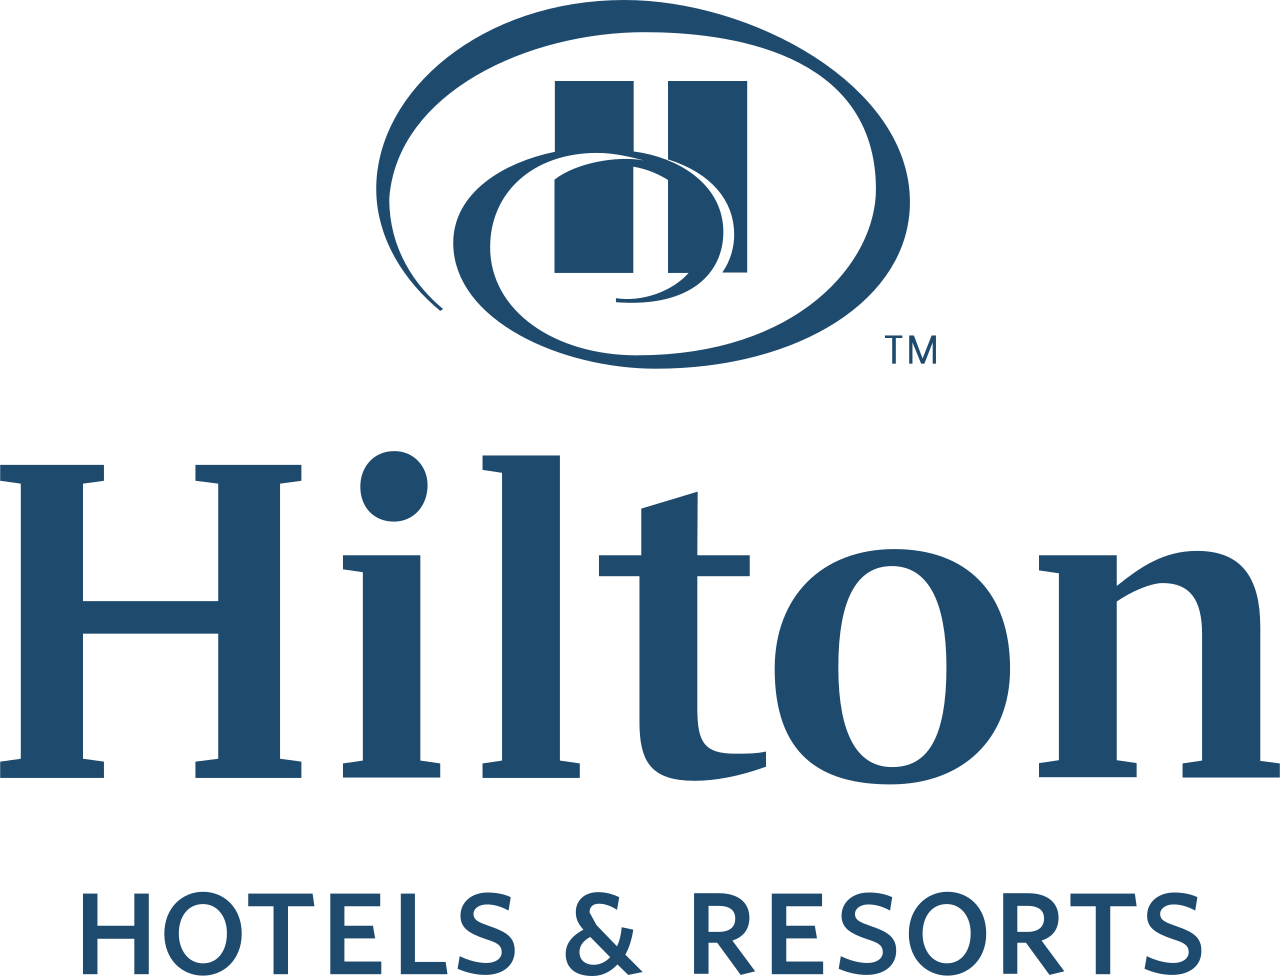 Doubletree Hotel Logo - Hilton Hotels & Resorts